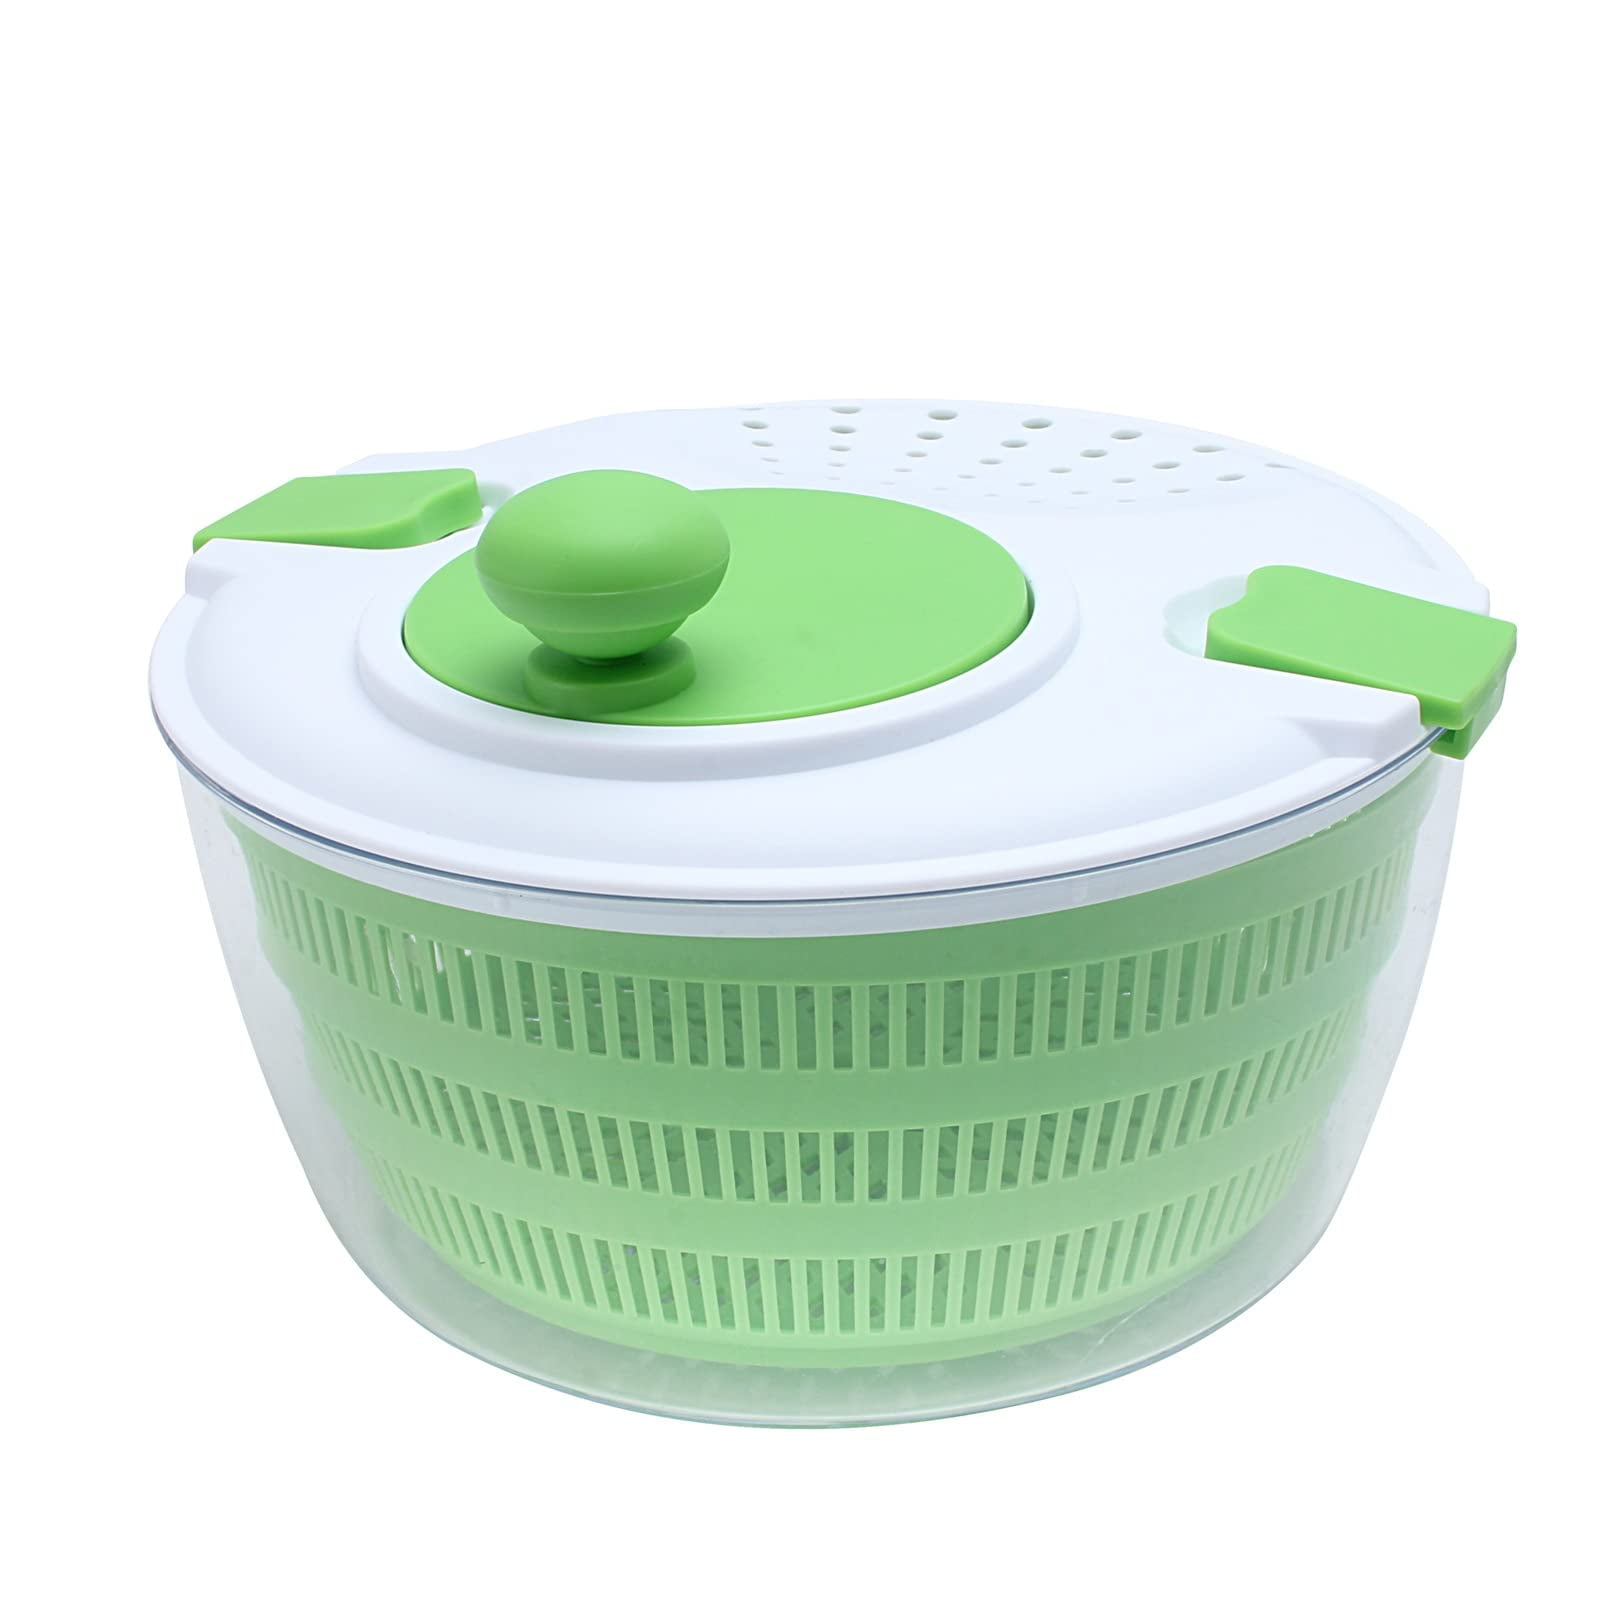  Salad Spinner Vegetable Washer Dryer Drainer Strainer with Bowl  & Colander, Fruits and Vegetables Dryer by KAUKKO: Home & Kitchen